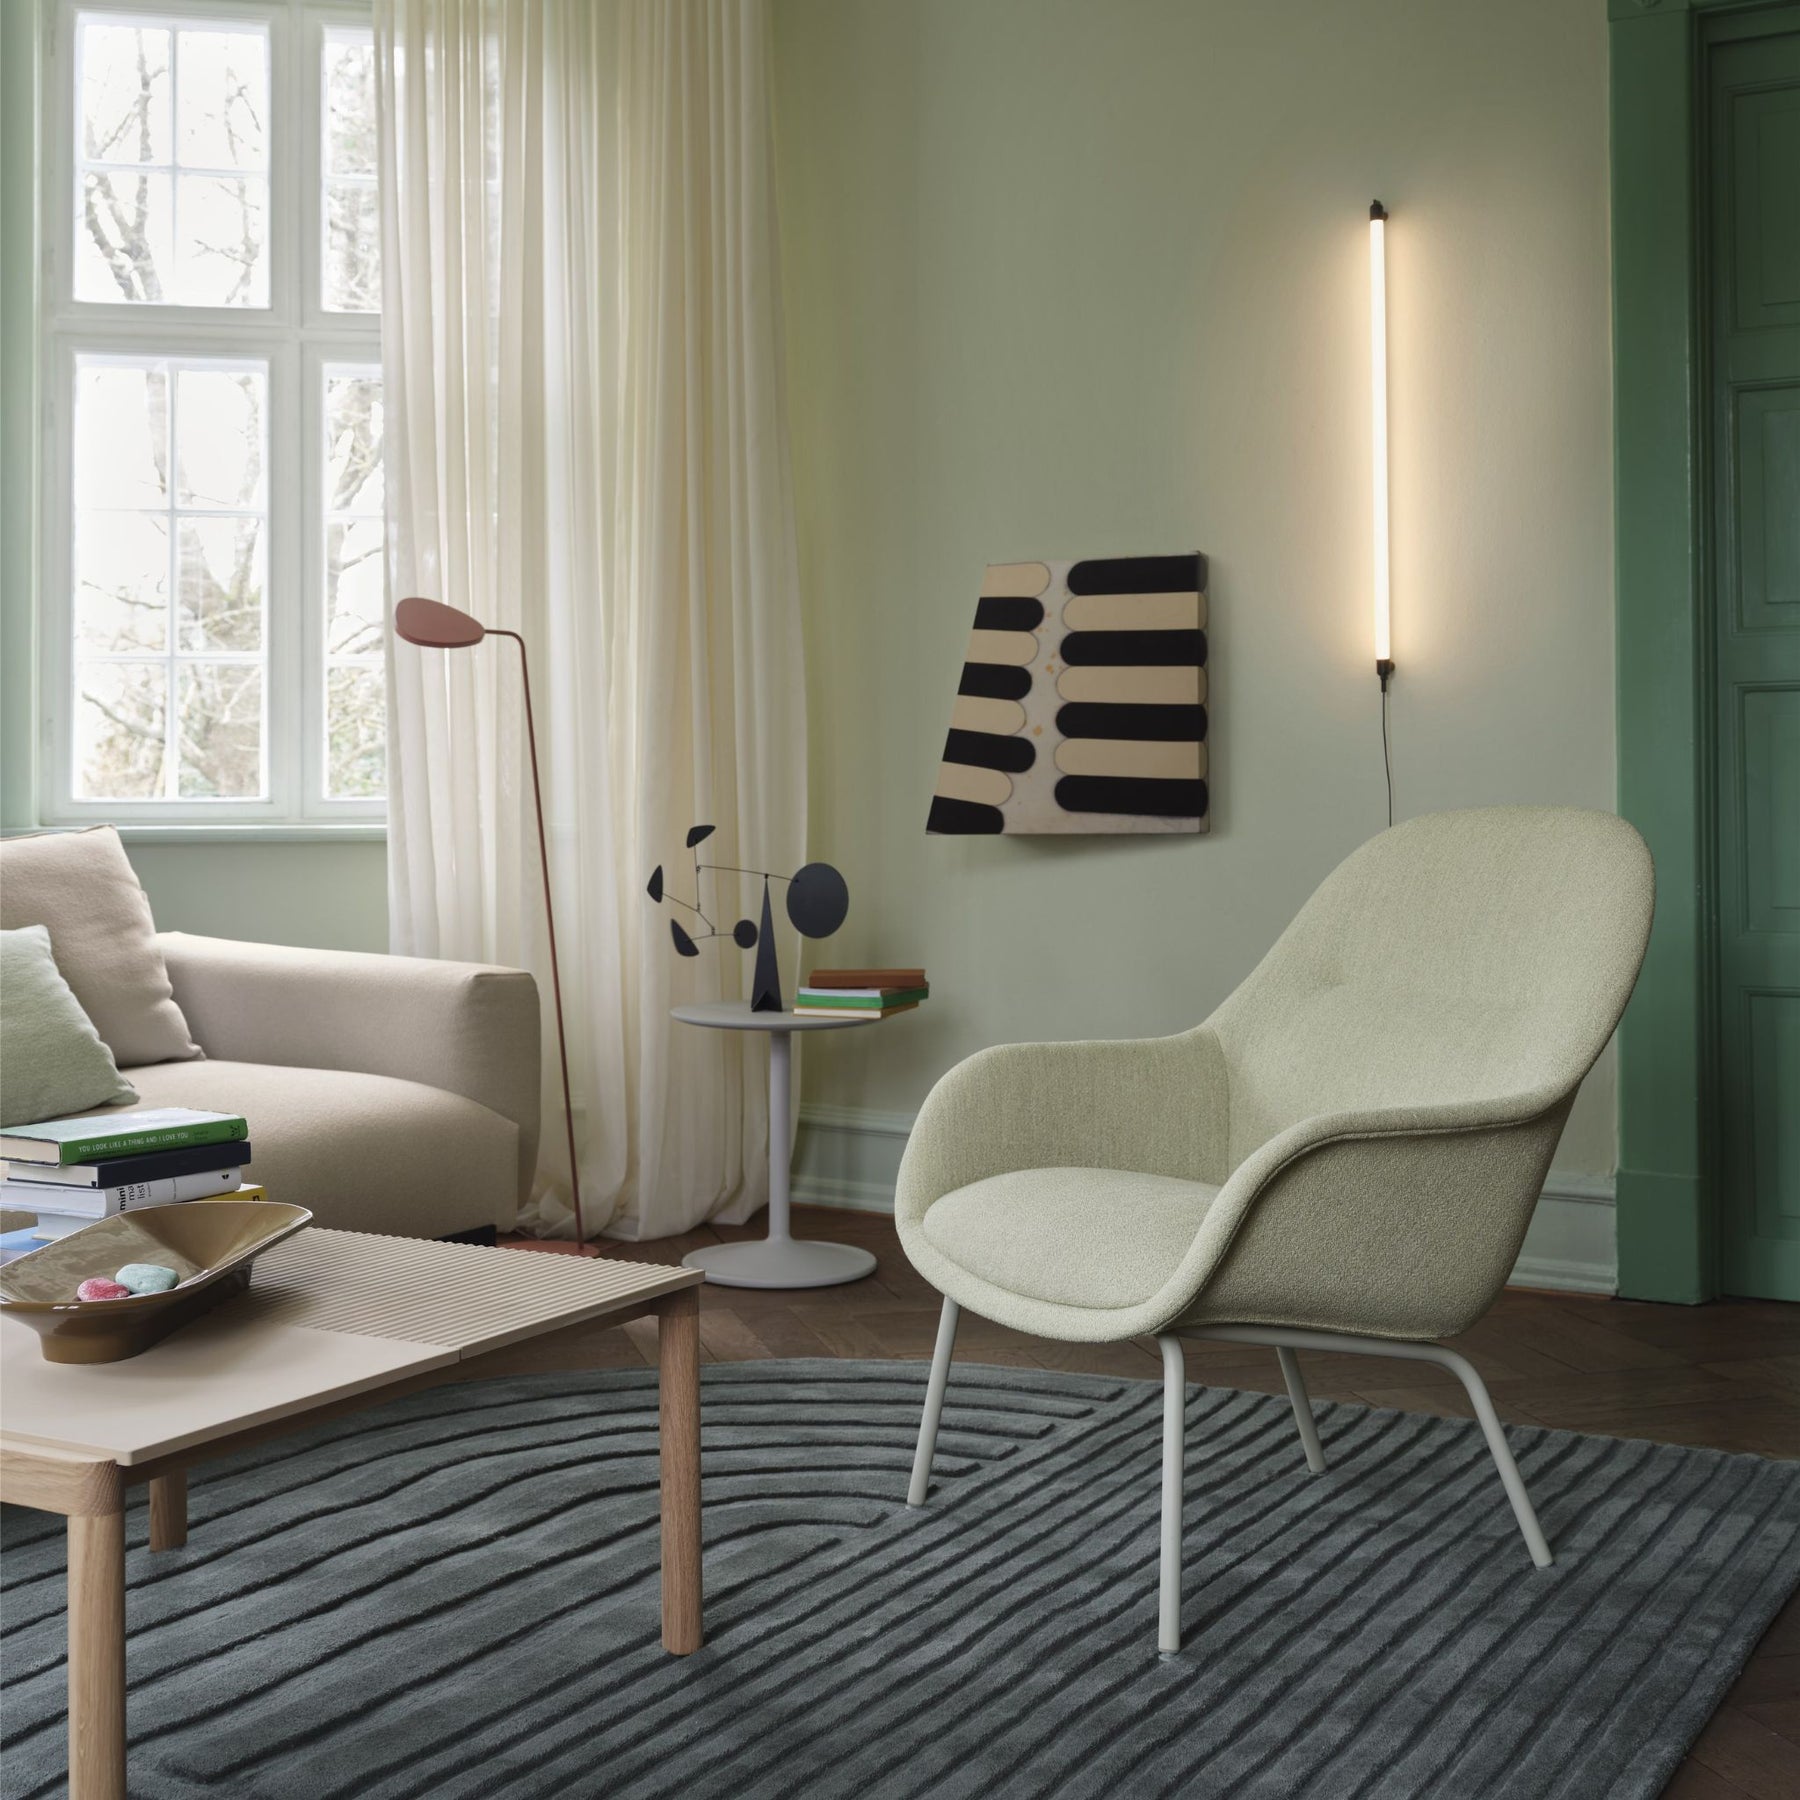 Muuto Relevo Rug Dark Green in Living Room with Fiber Lounge Chair